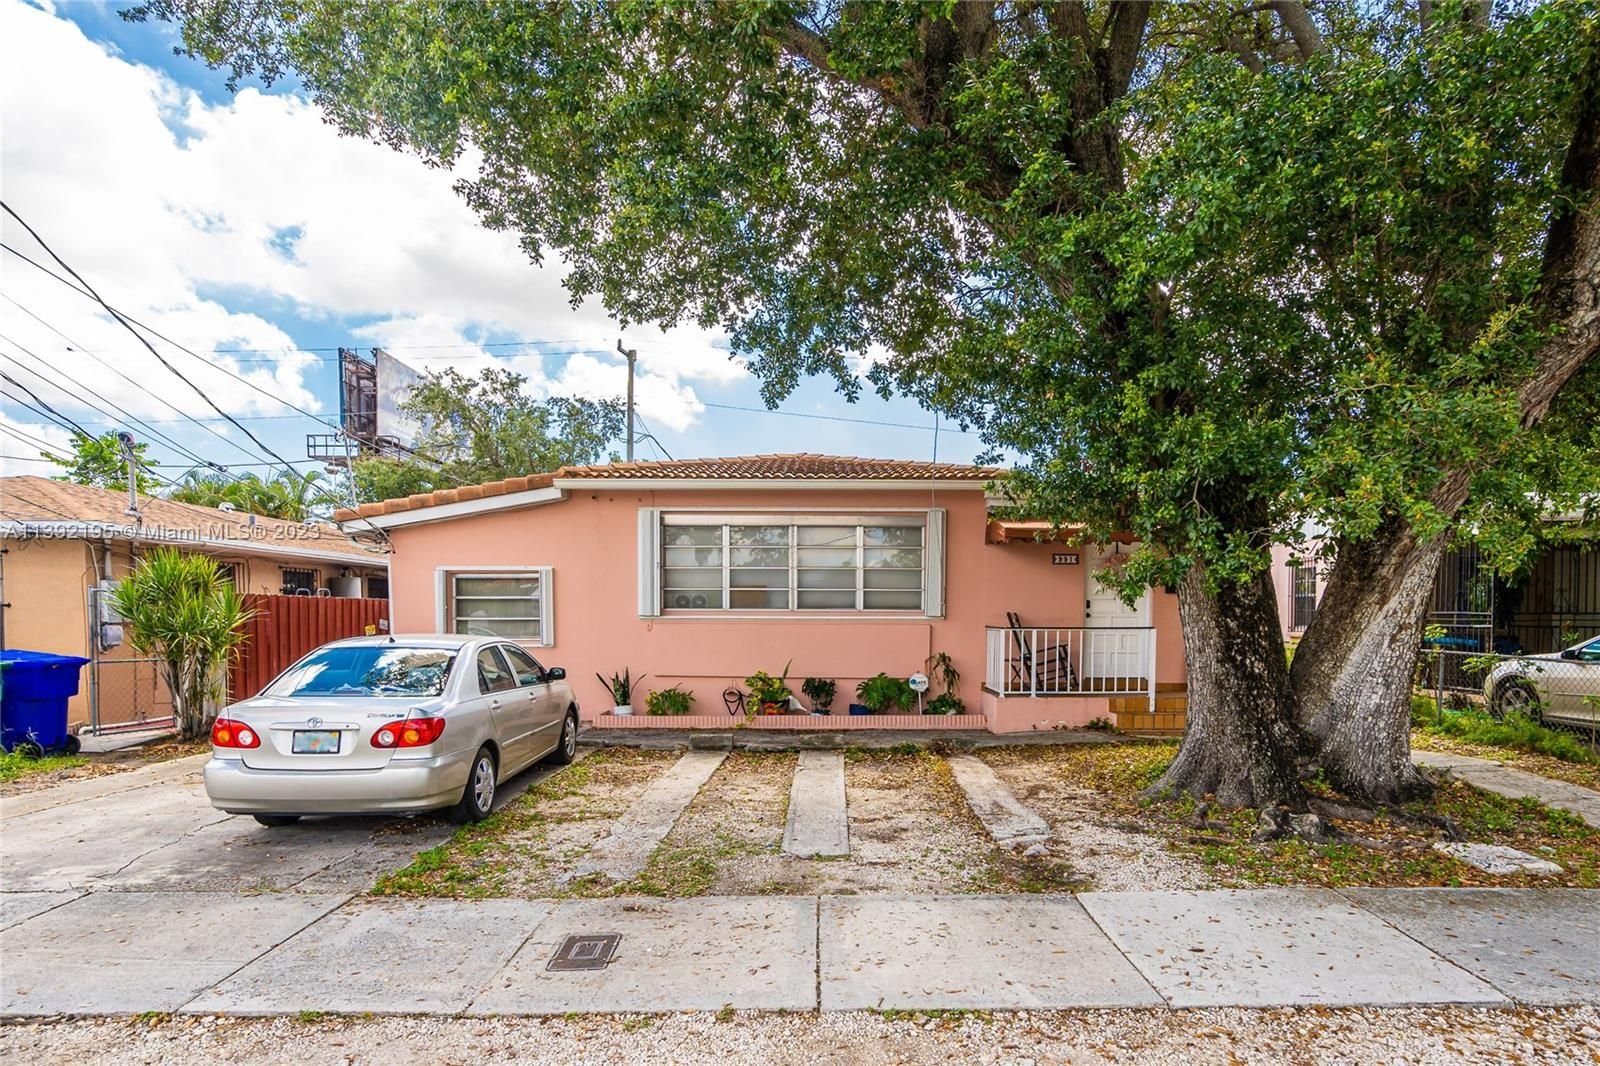 Real estate property located at 991 27th Ct, Miami-Dade County, Miami, FL